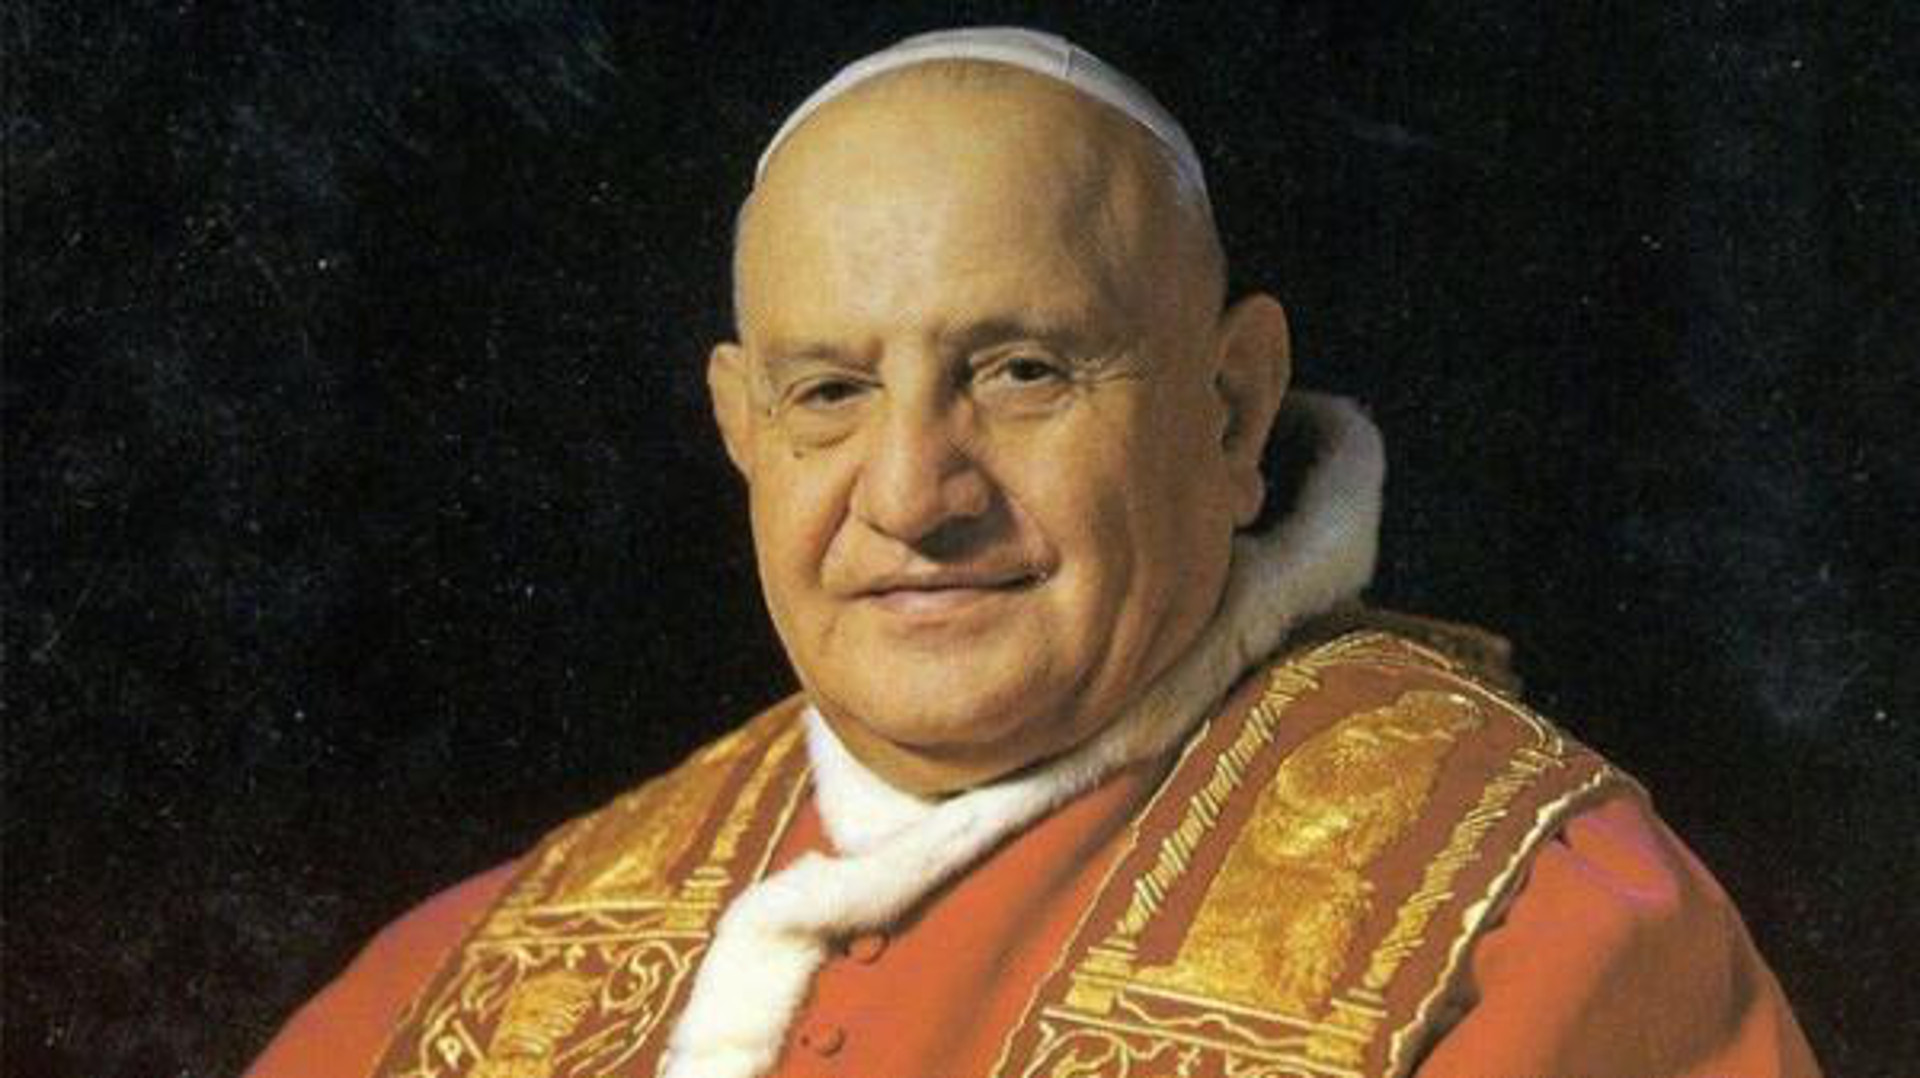  Jean XXIII | Wikimedia commons
